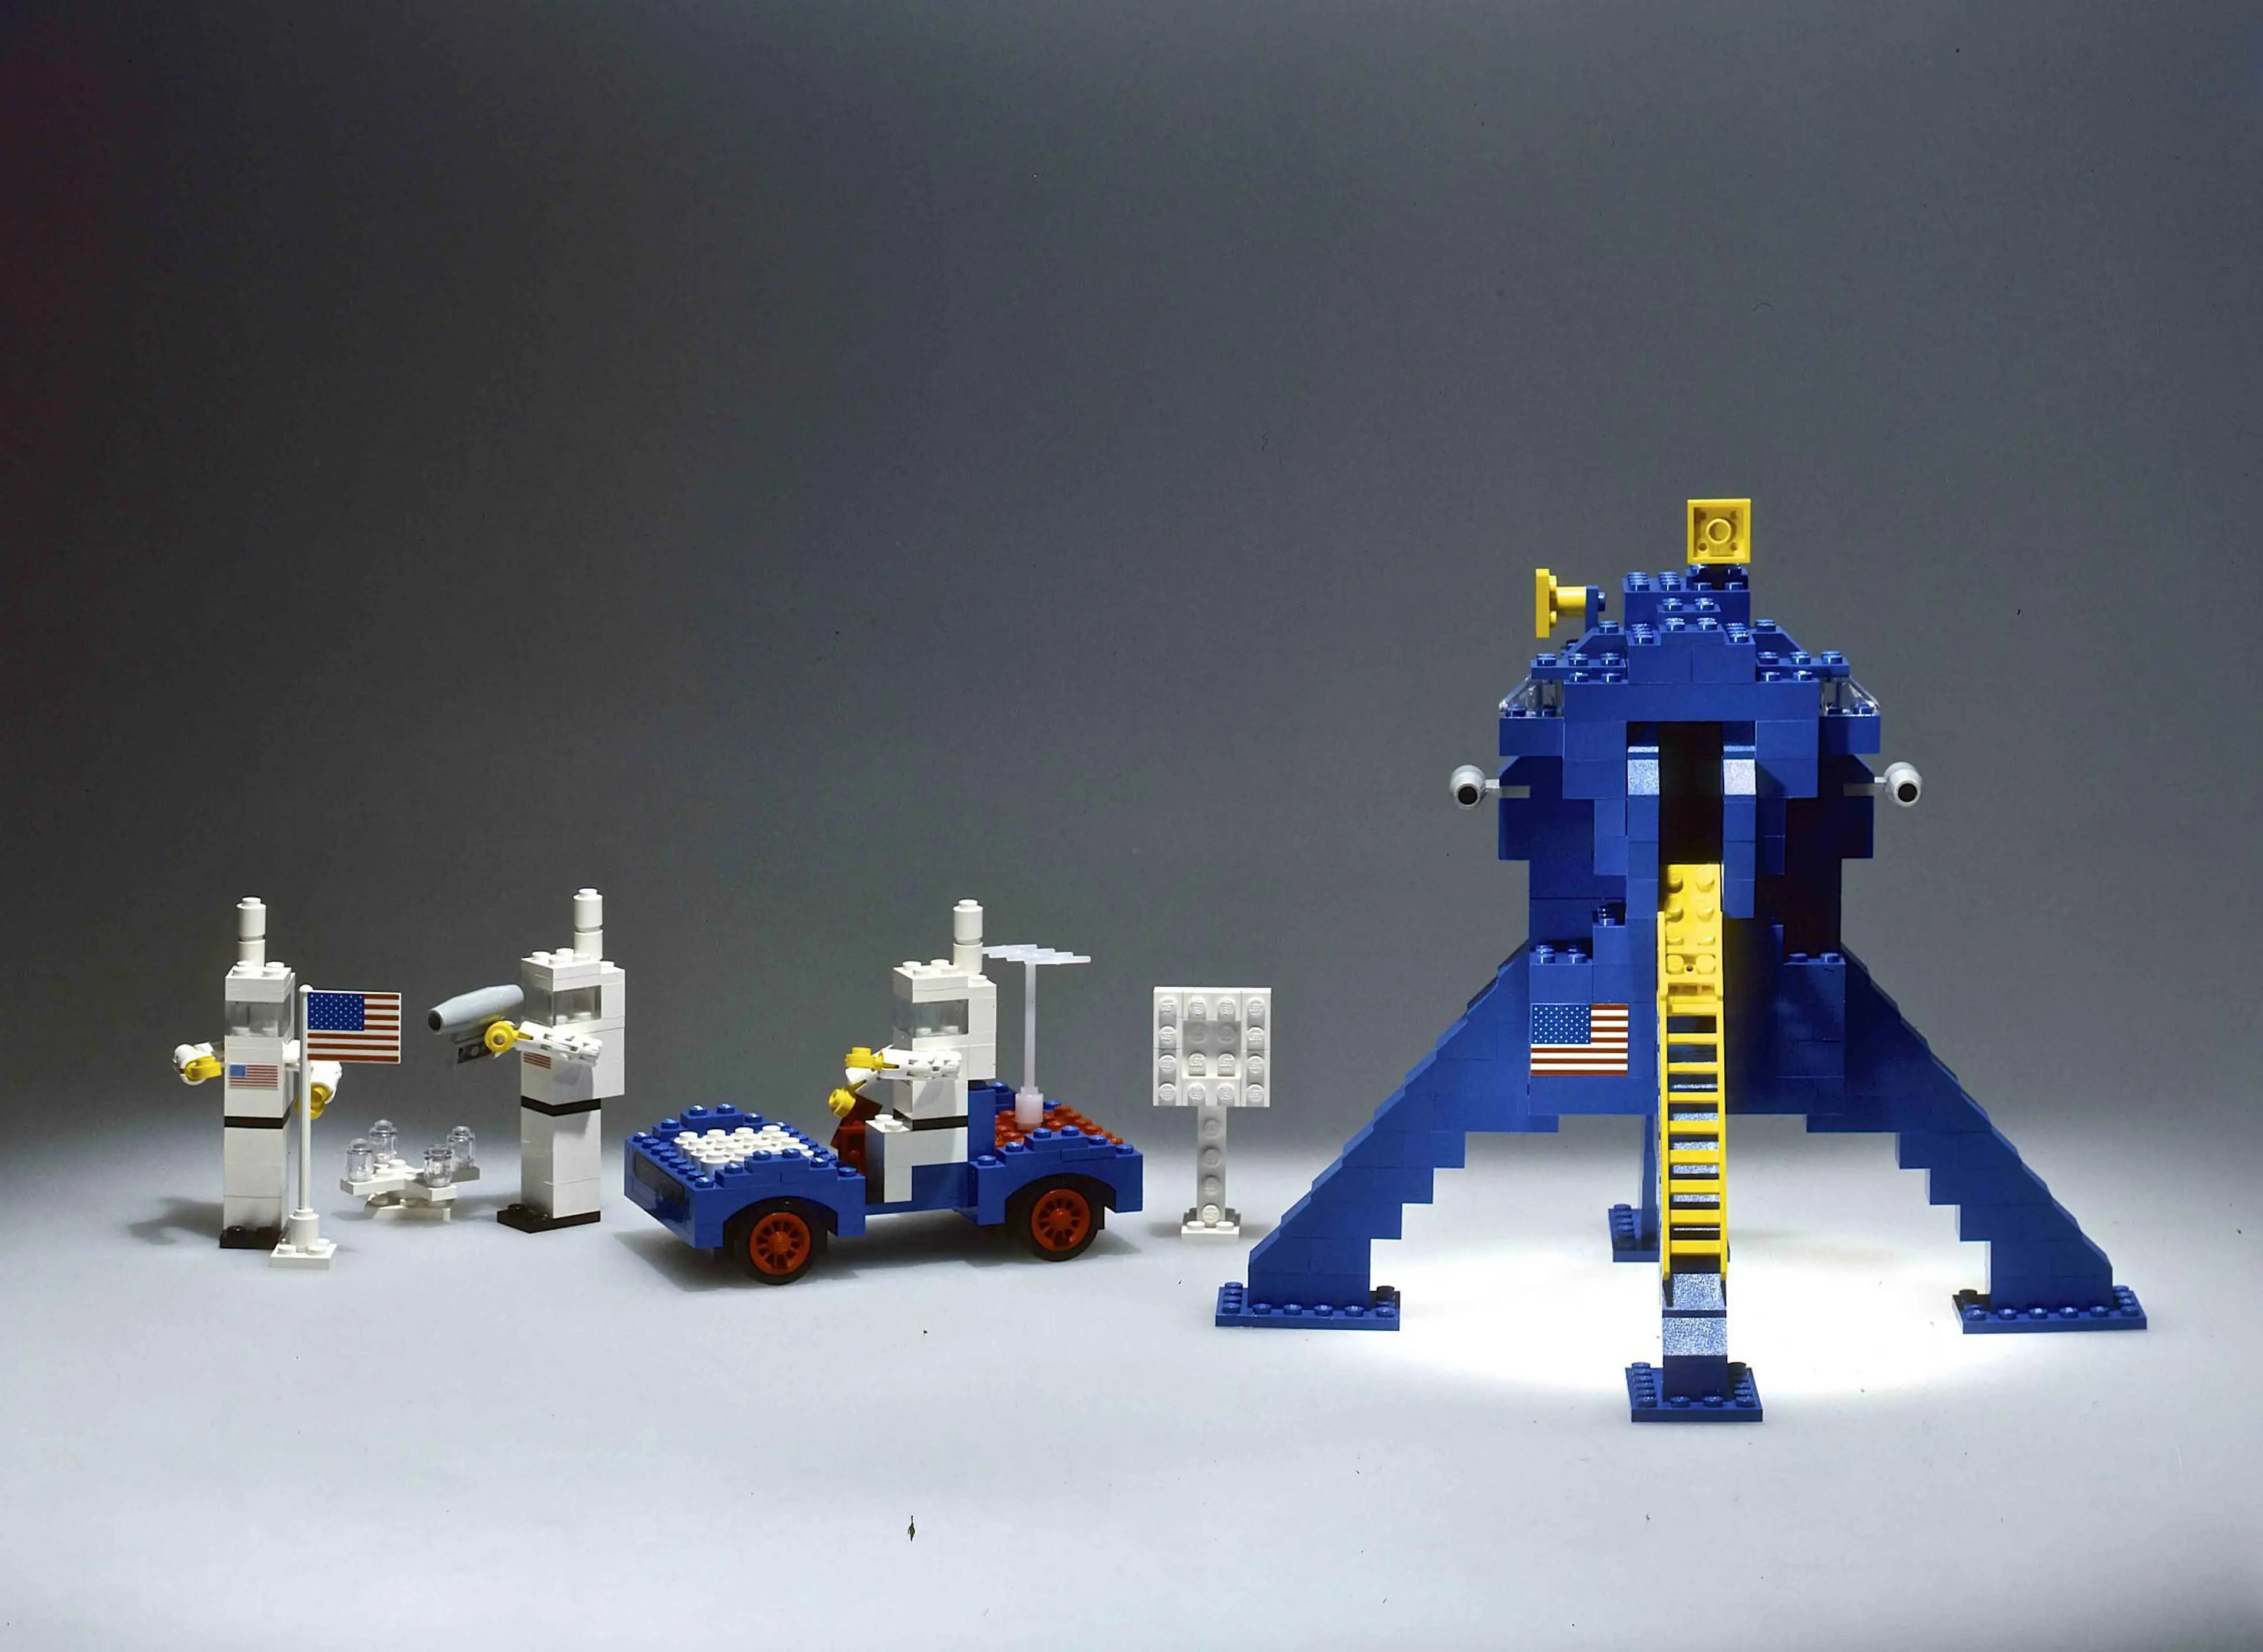 LEGO moon landing set from 1975